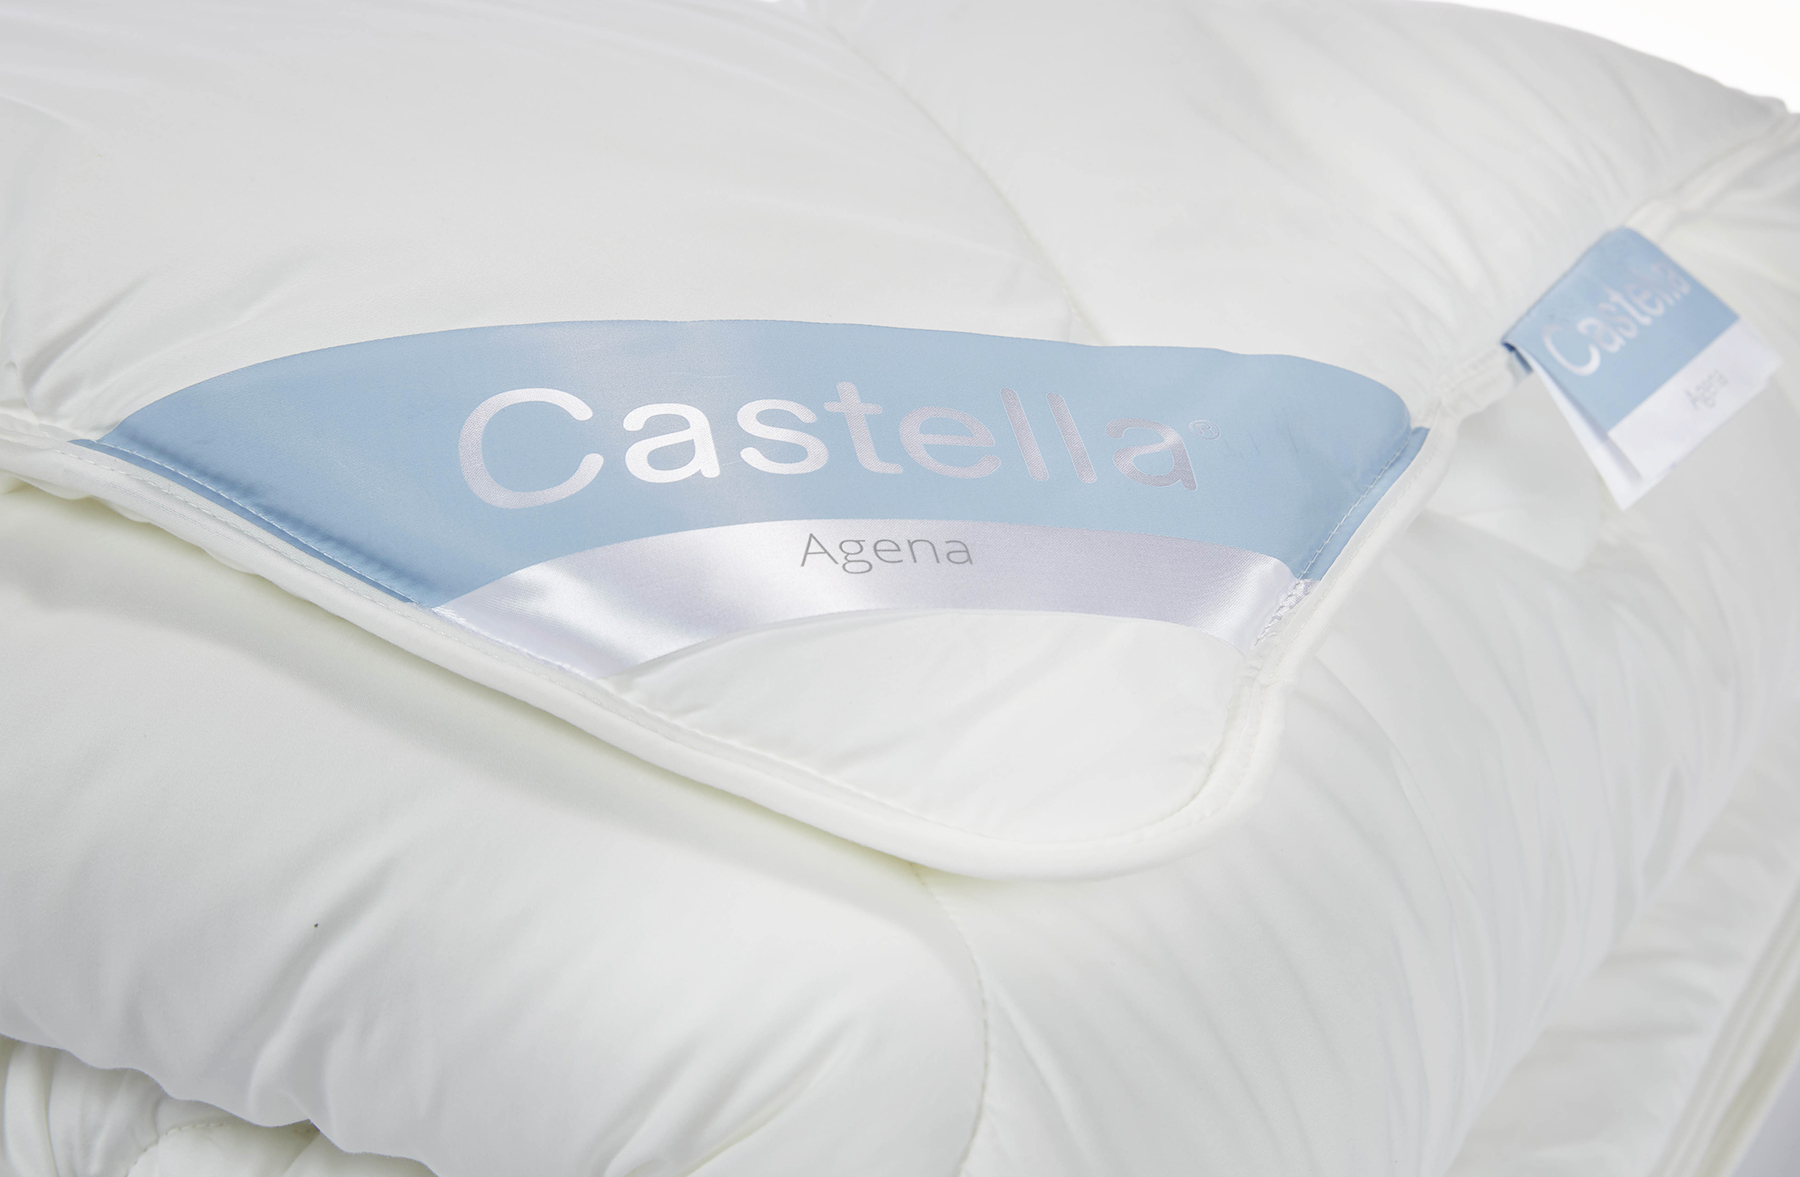 Castella Agena Synthetisch Winter Dekbed